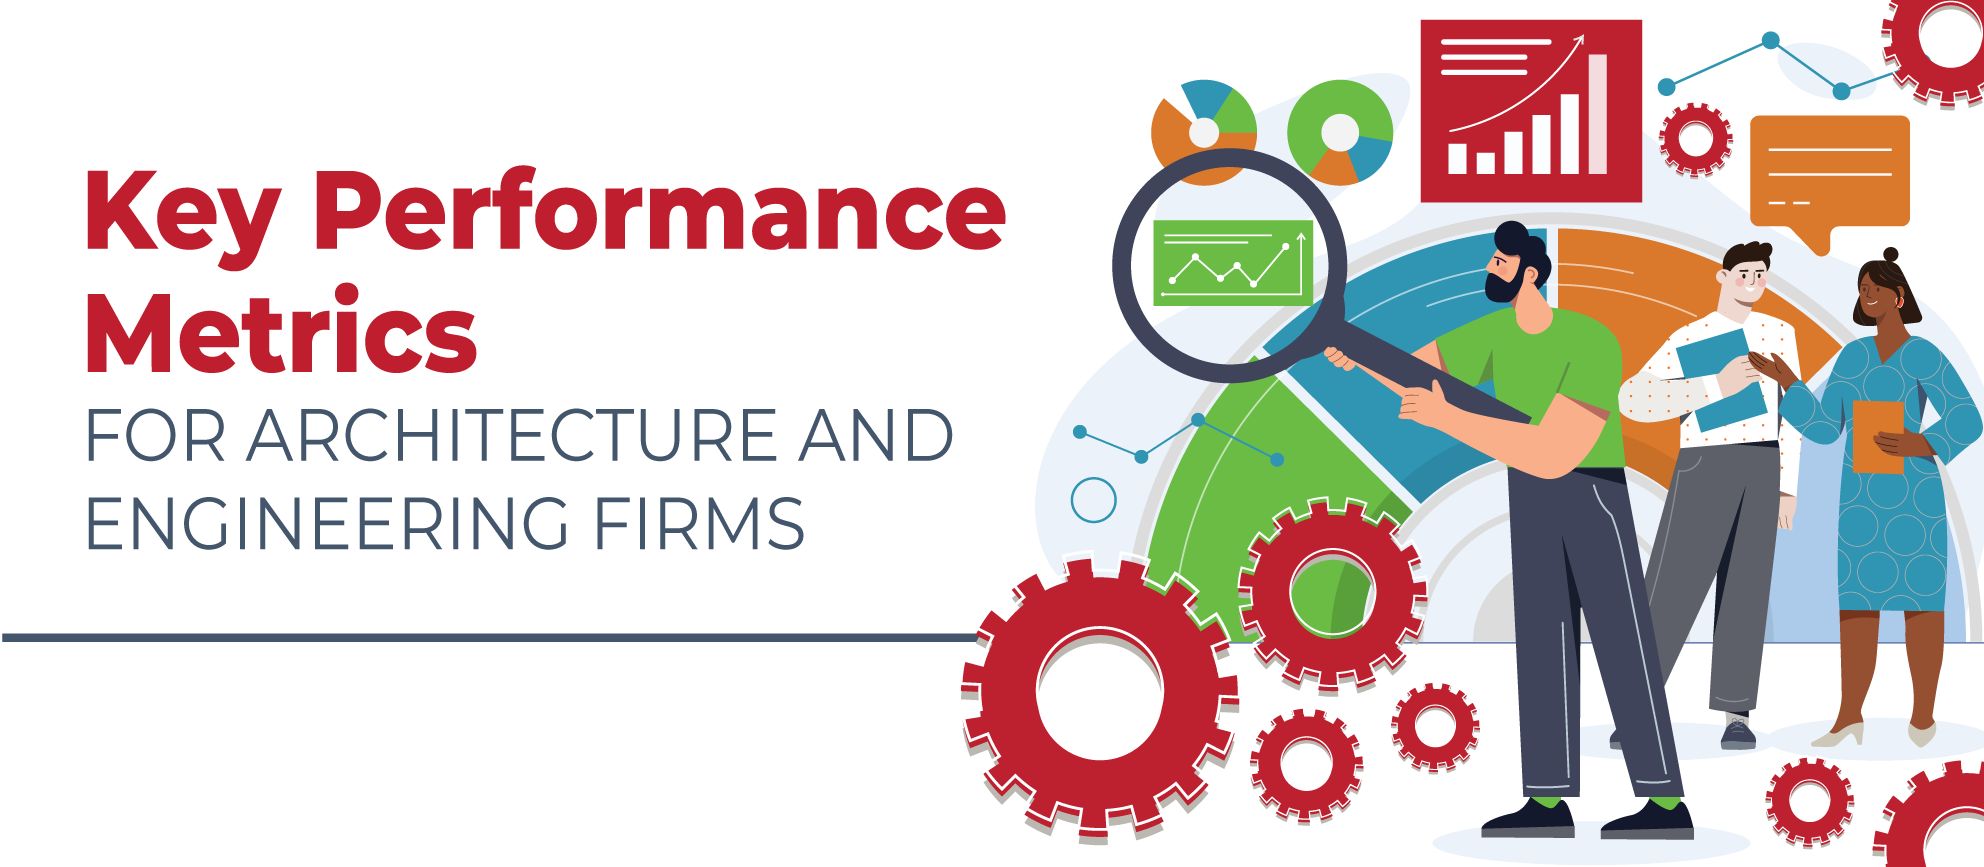 08-17-23 Key Performance Metrics for AE Firms Banner